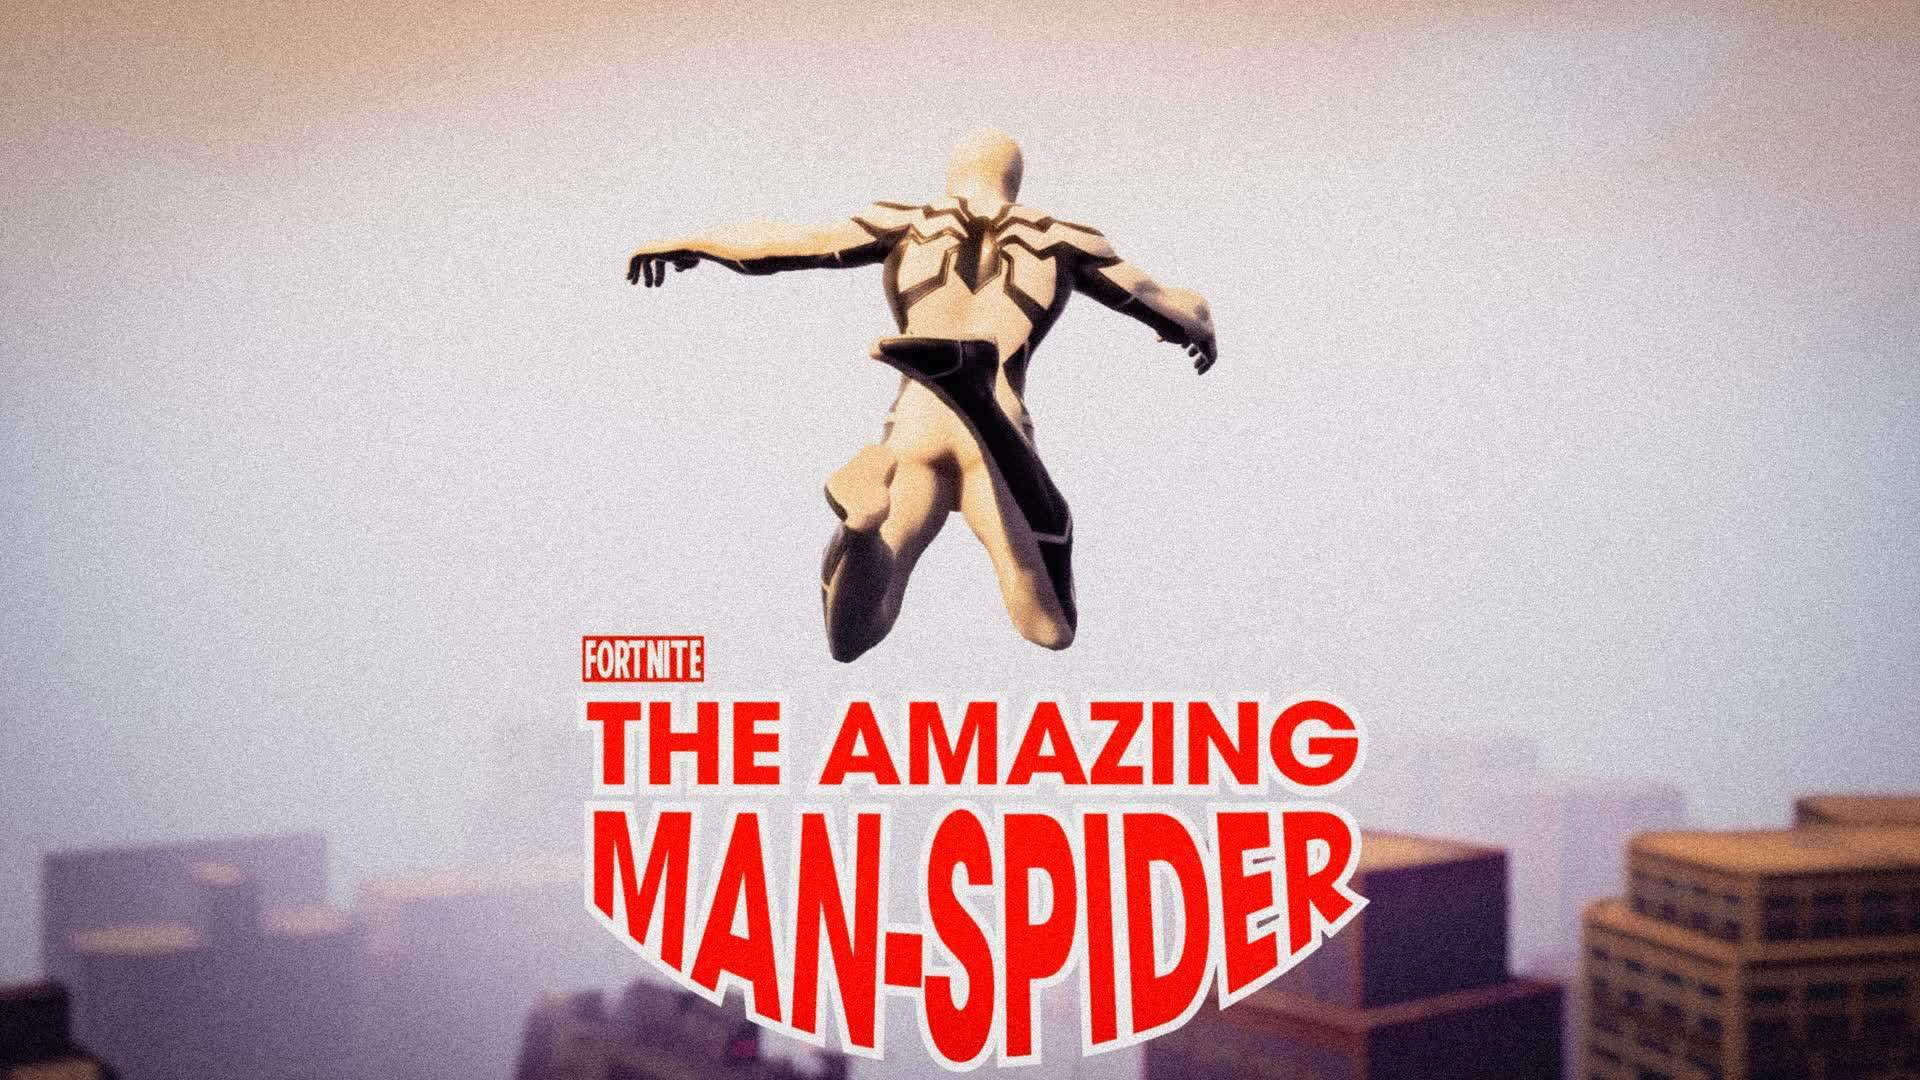 THE AMAZING MAN-SPIDER 9635-2275-6900